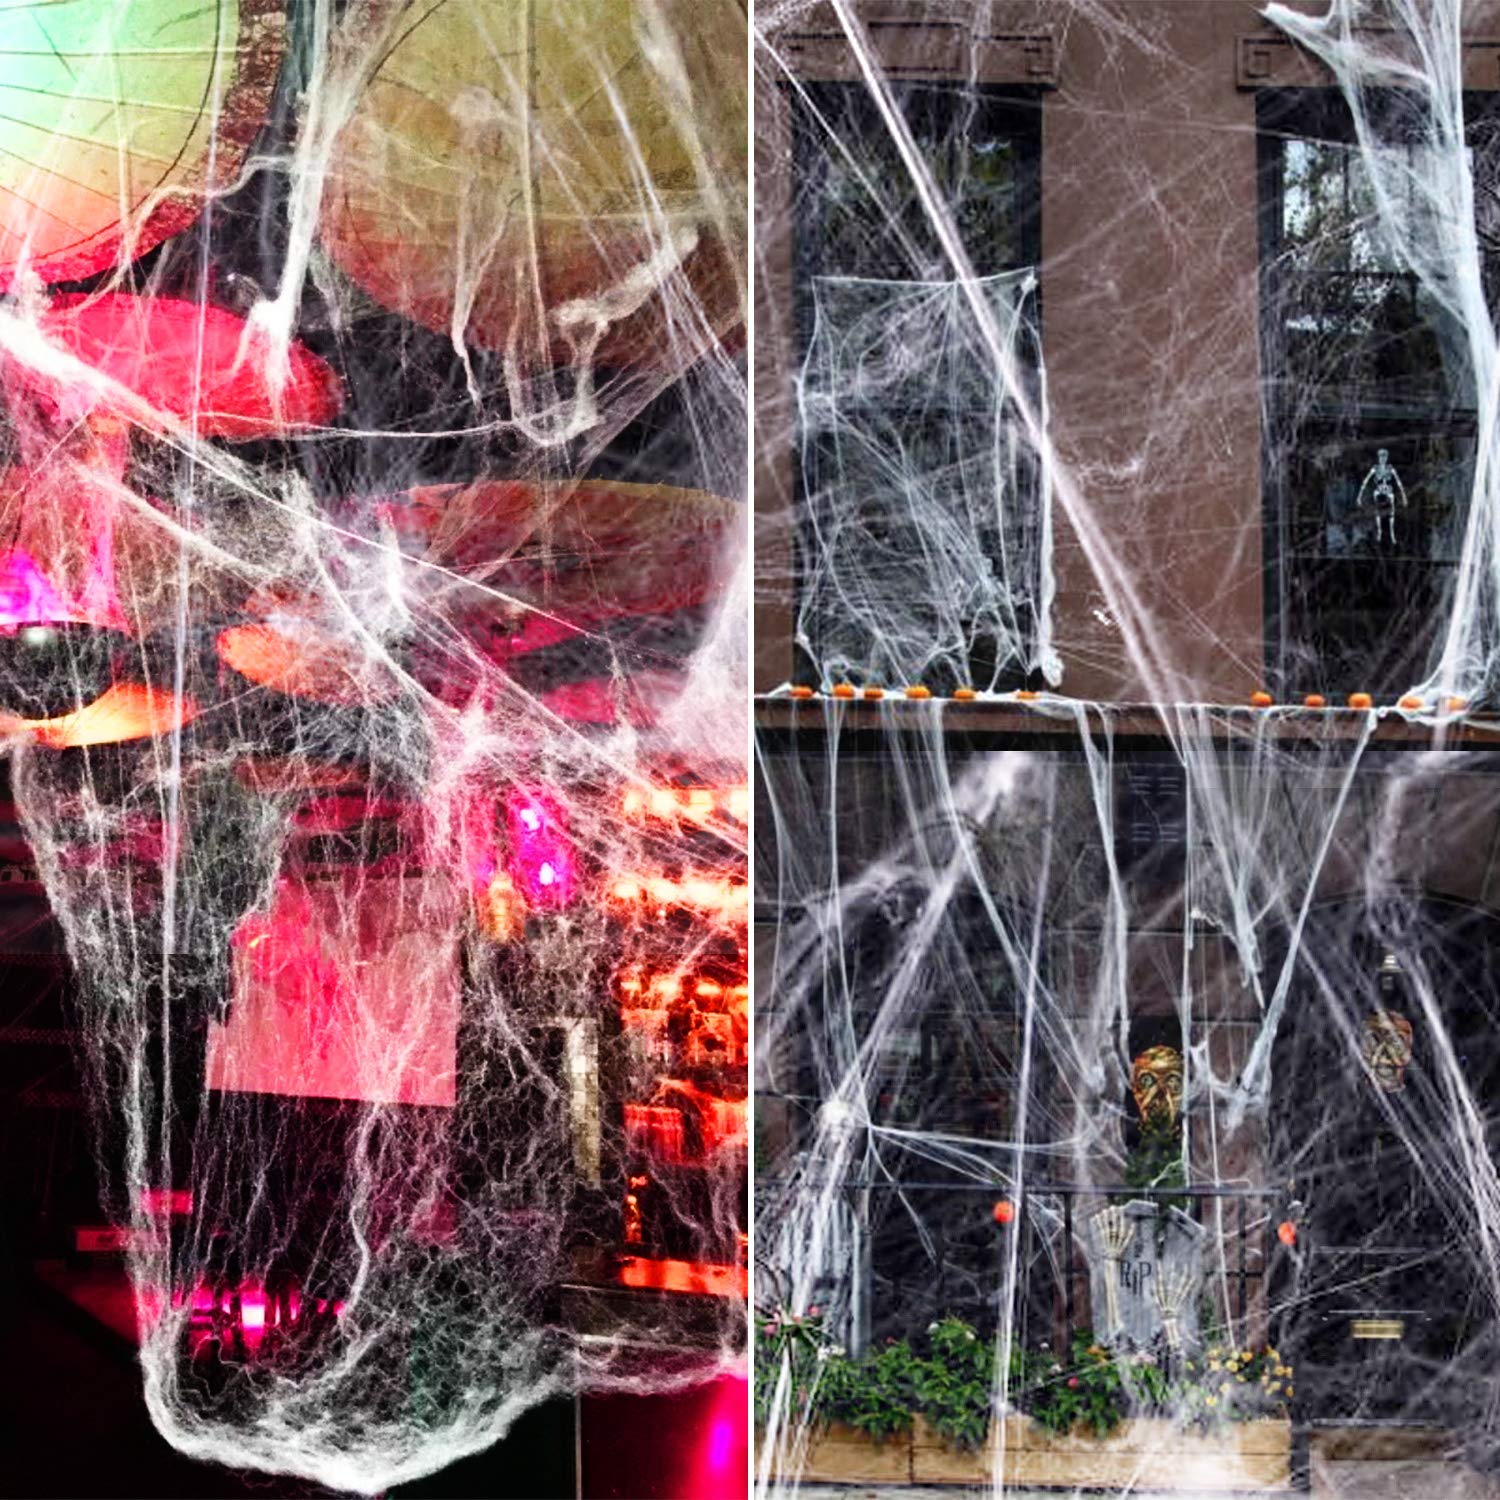 1000 sqft Halloween Spider Web Decorations, VIRIITA Super Stretch Fake Spider Webs, White Webbing Spooky Cobwebs Halloween Supplies for Halloween Party Decorations Bar Haunted House